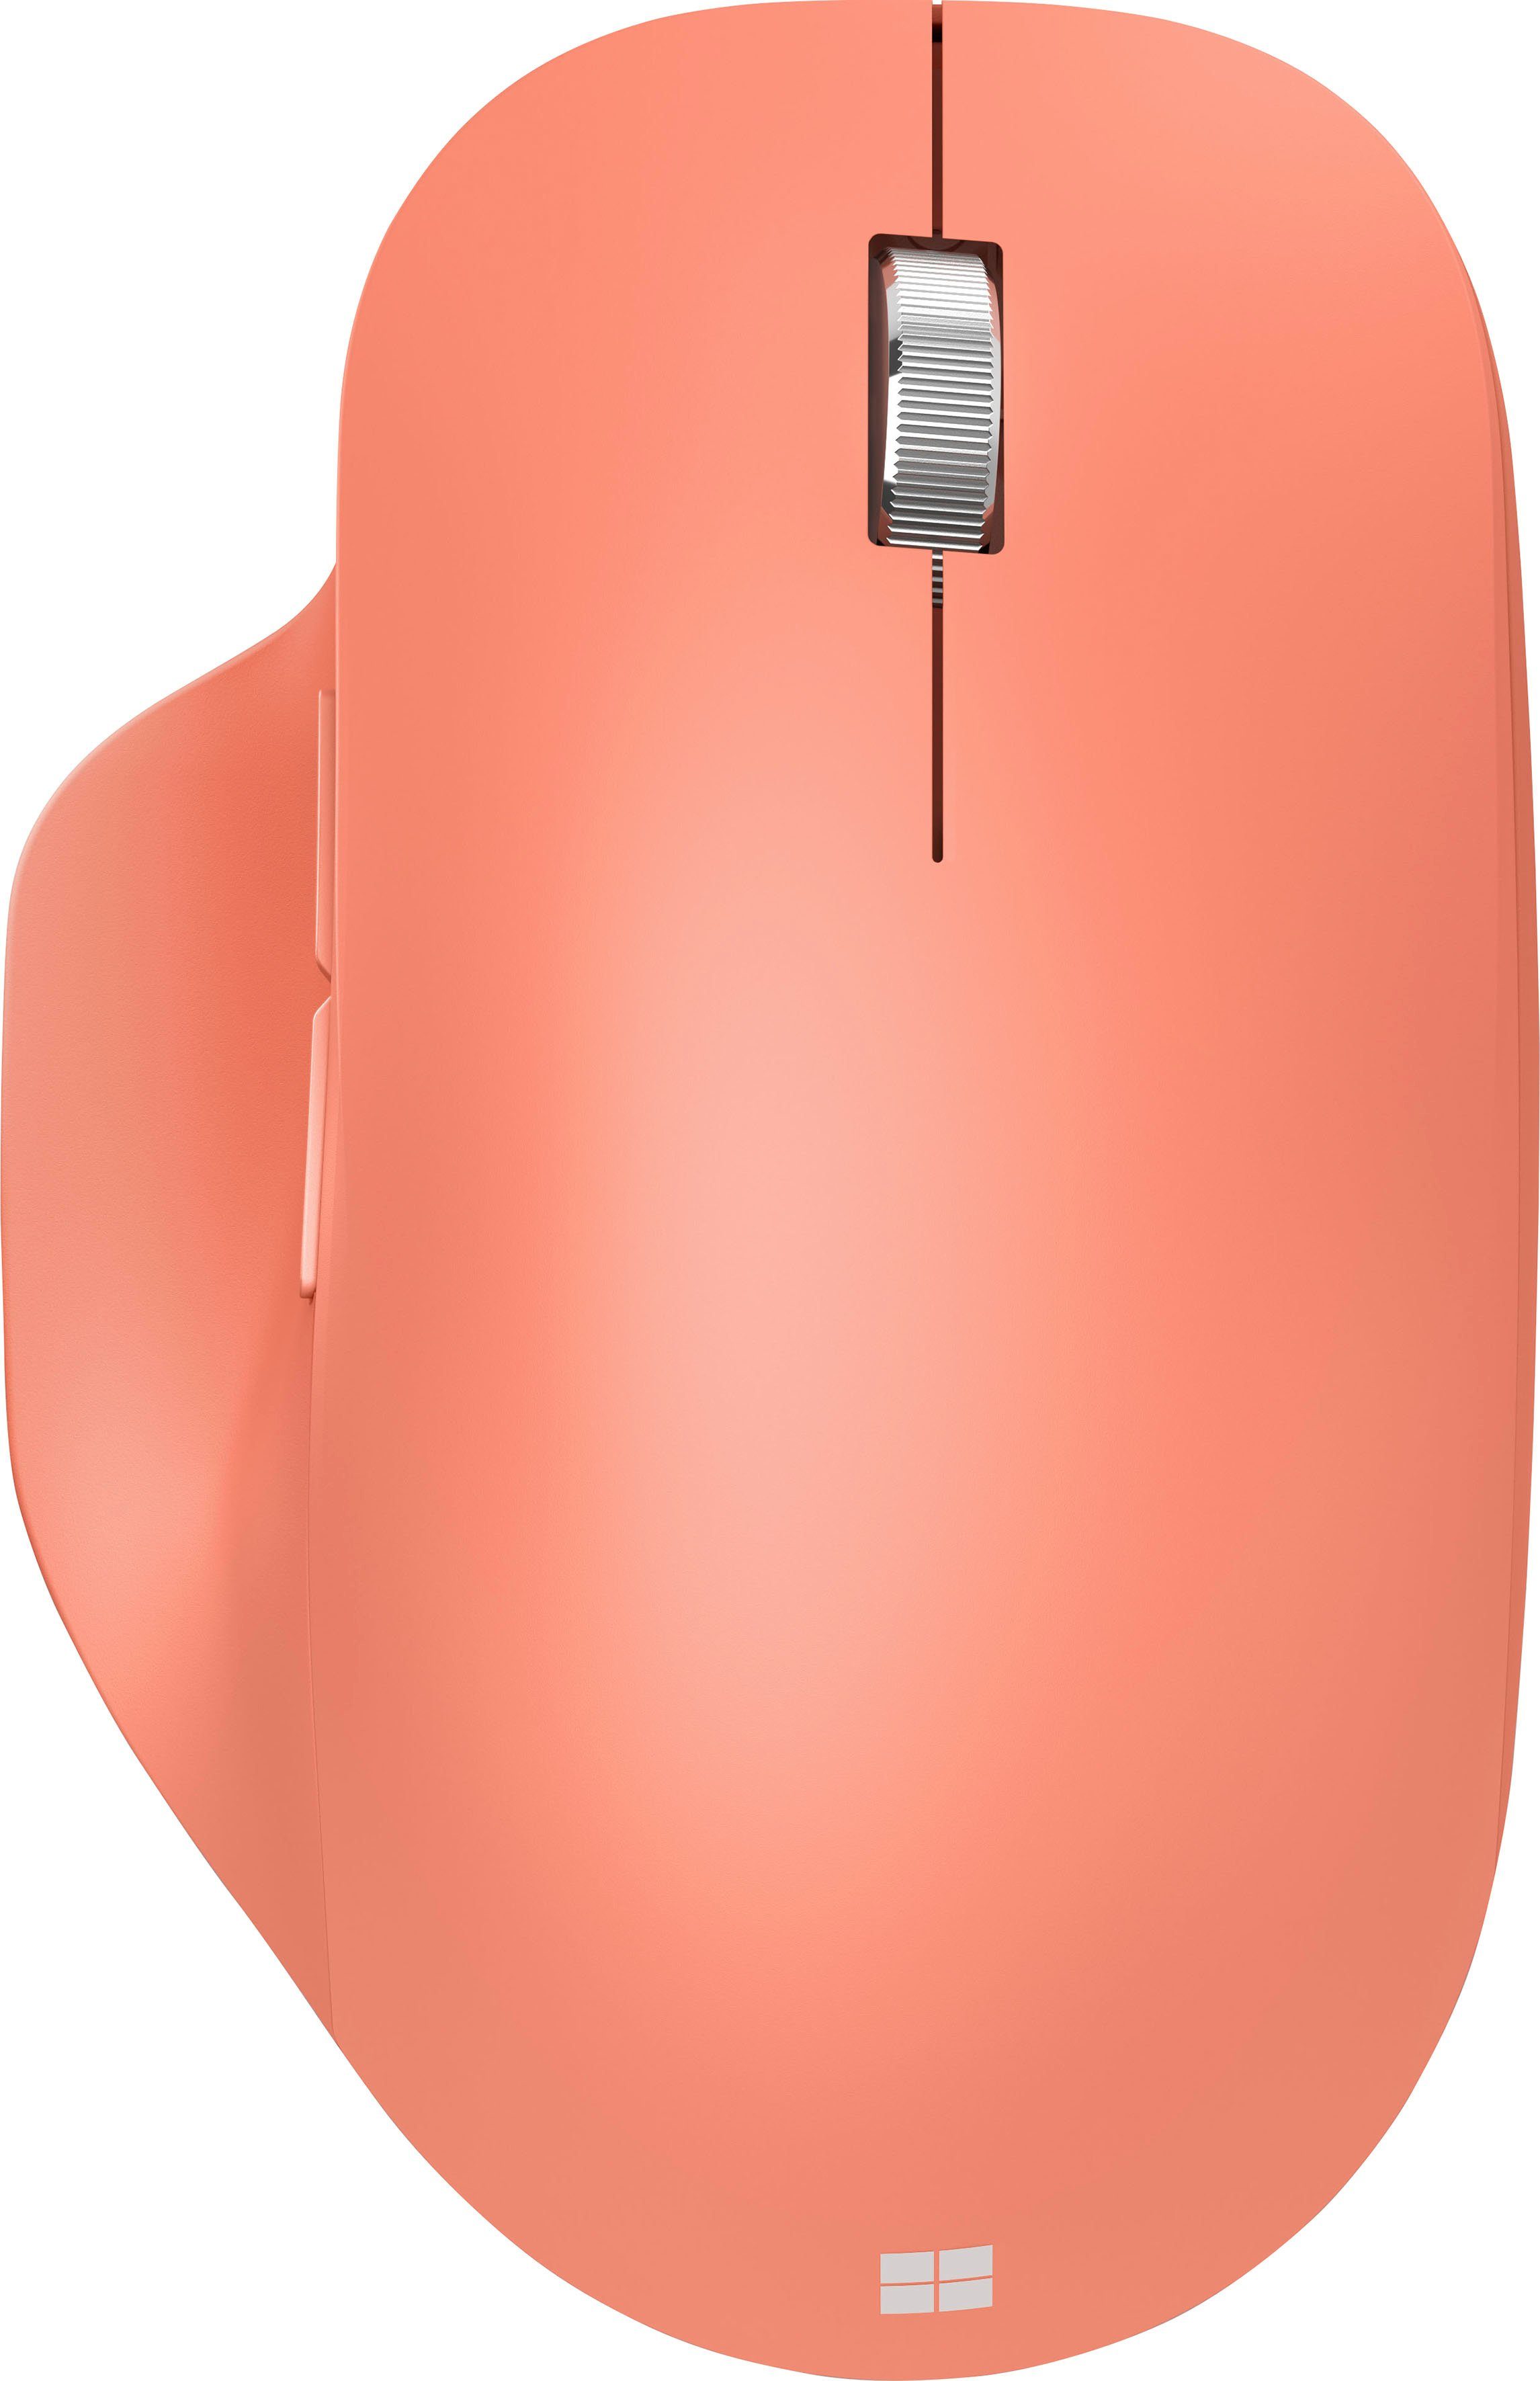 Microsoft »Microsoft Bluetooth Ergonomic Mouse« Maus